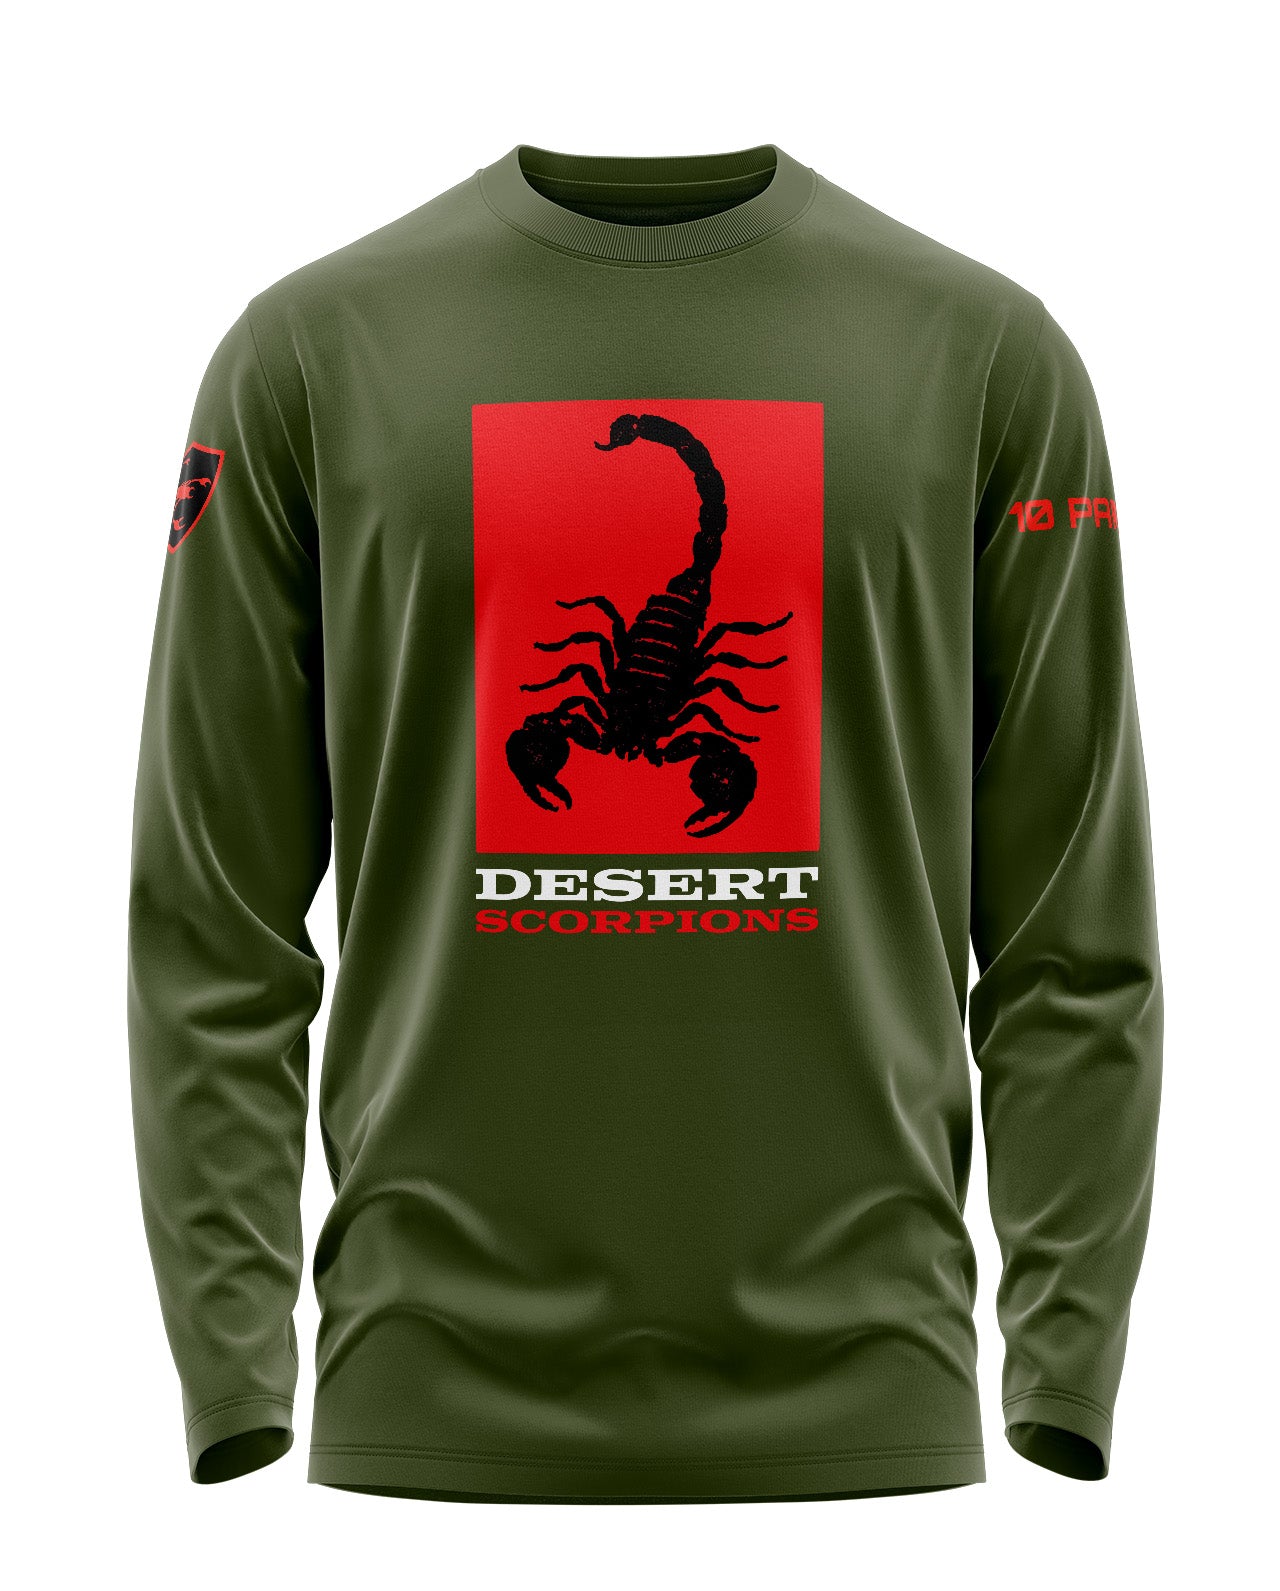 DESERT SCORPIONS-10 PARA SF Full Sleeve T-Shirt